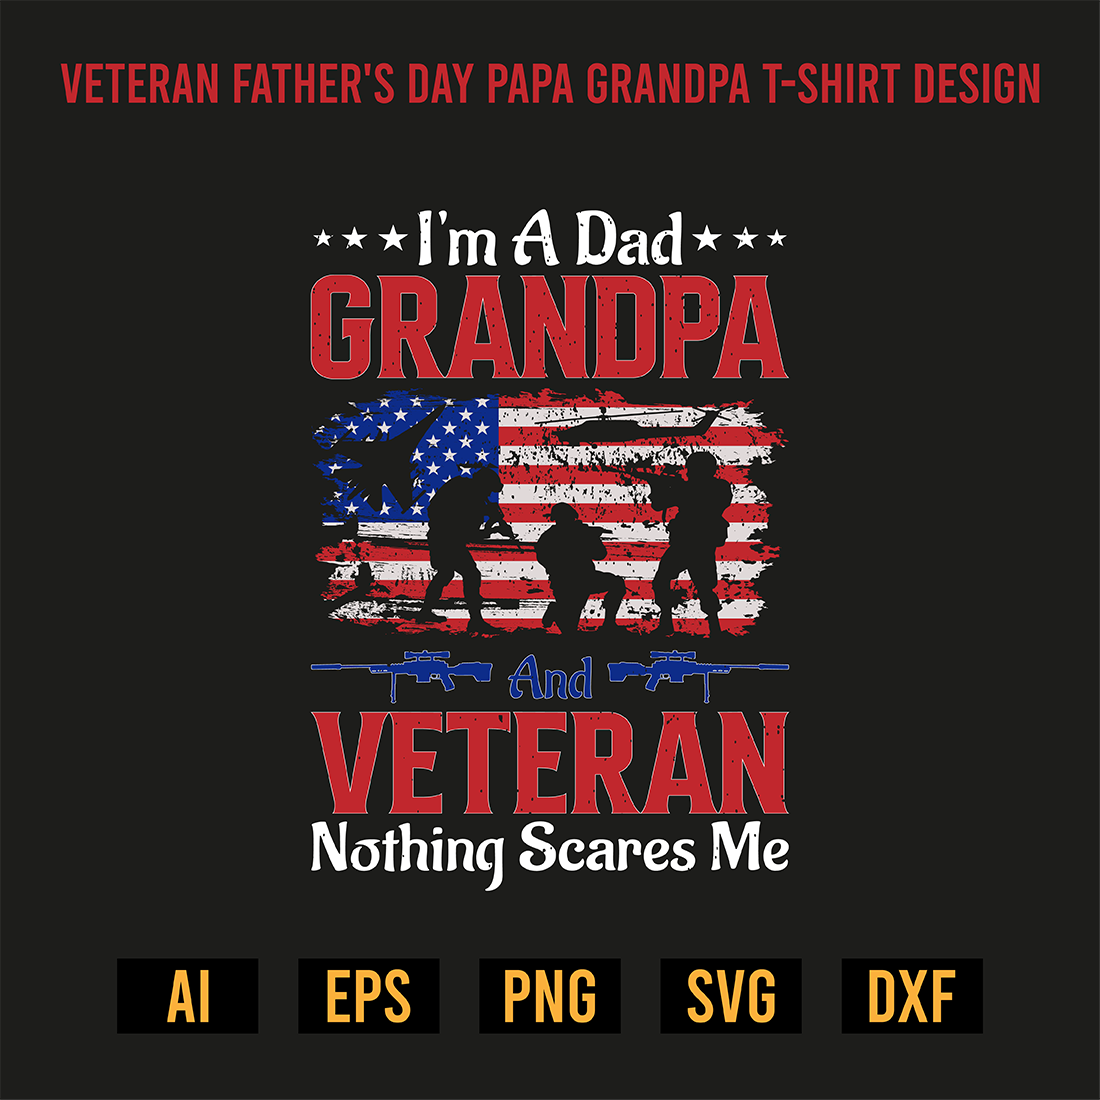 Veteran Father's Day Papa Grandpa T-Shirt Design preview image.